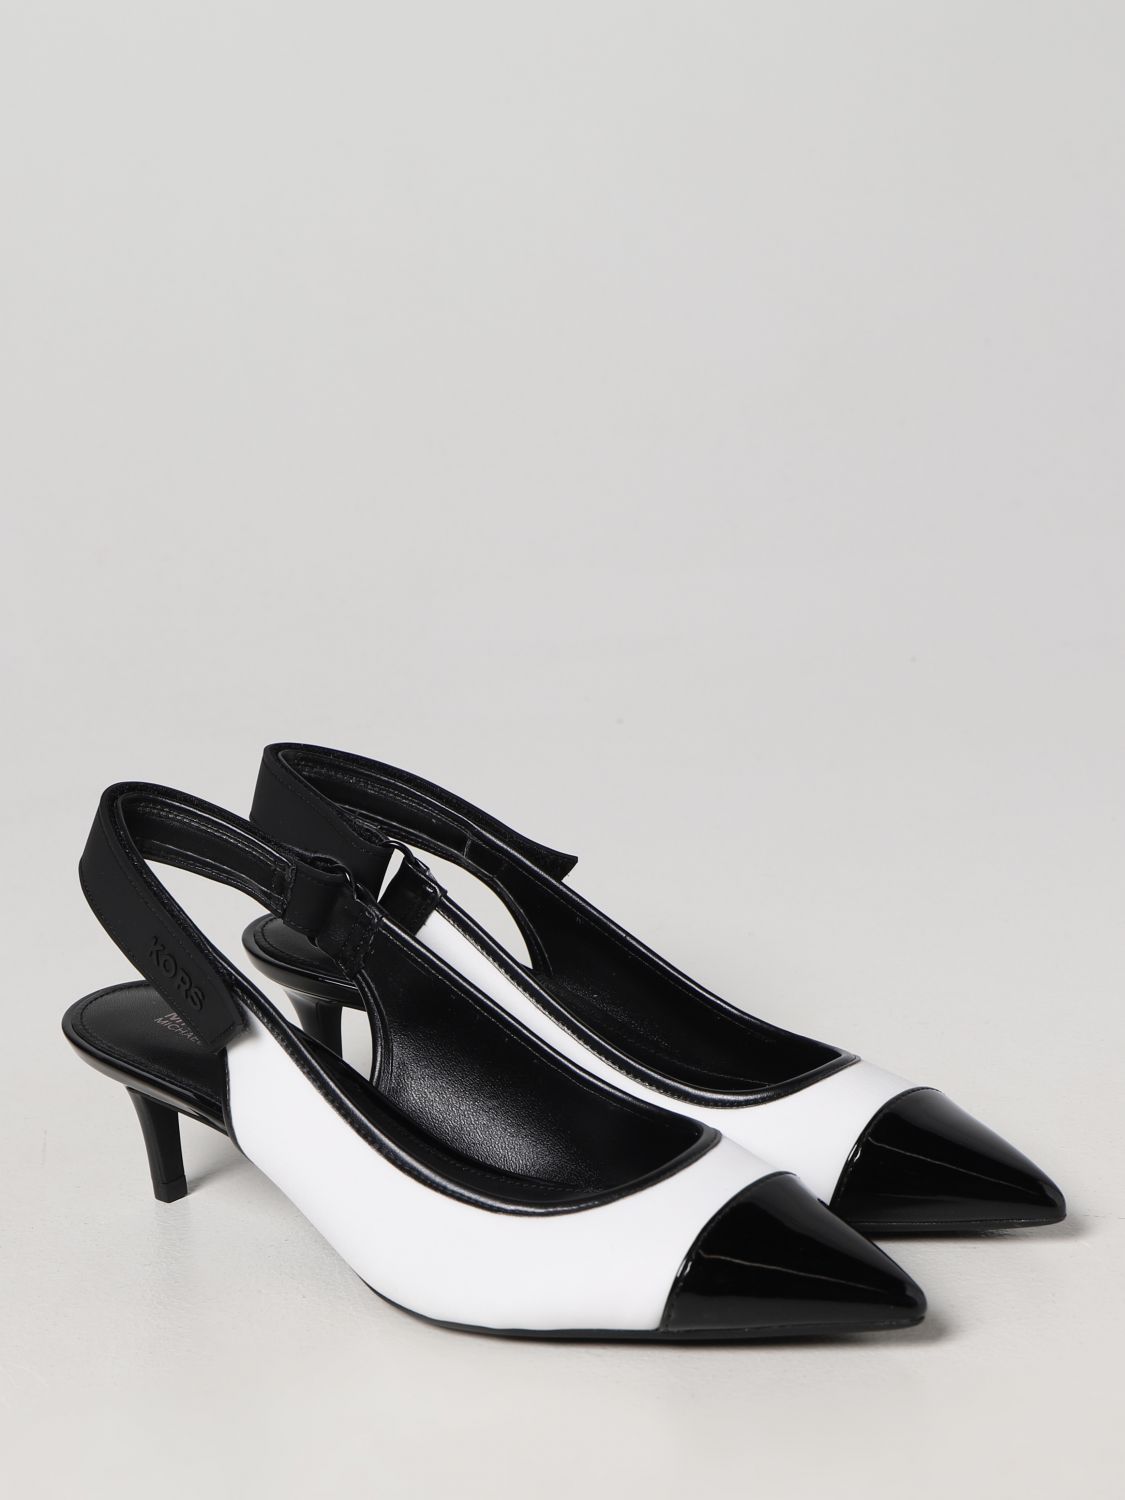 MICHAEL KORS: high heel shoes for woman - Black | Michael Kors high heel  shoes 40R3KUMPID online on 